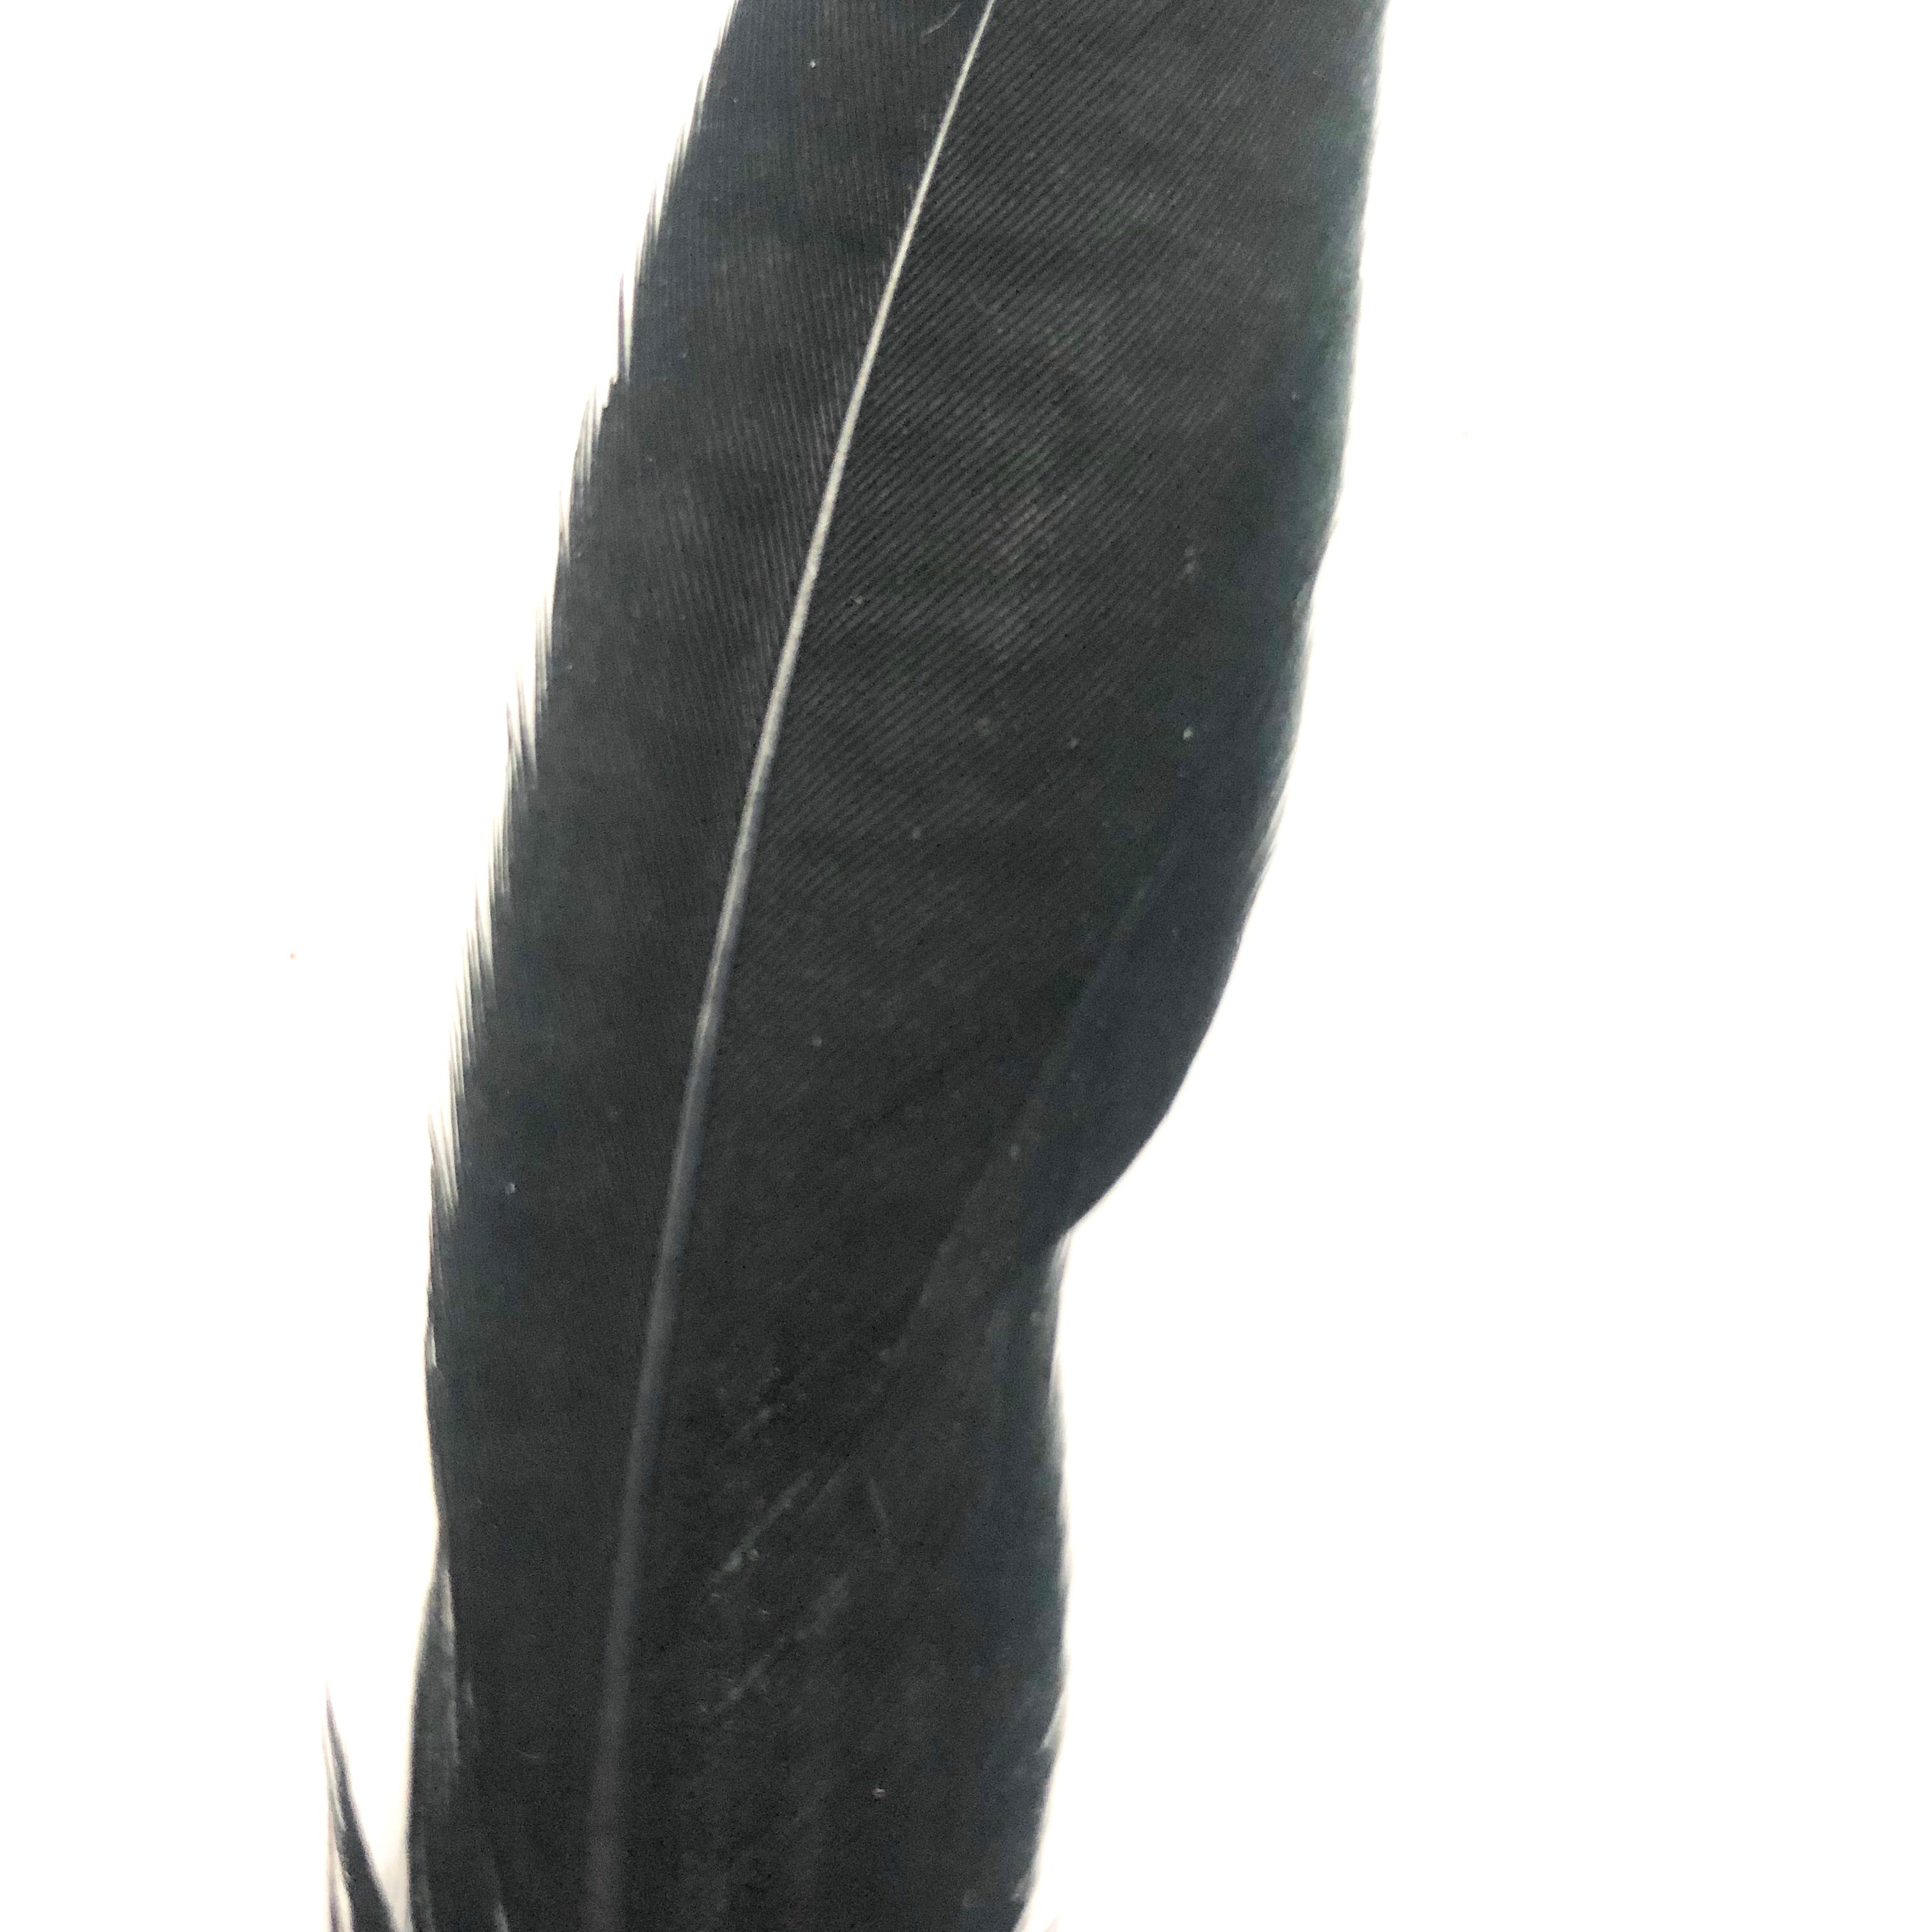 Under 6" Golden Pheasant Side Tail Feather x 10 pcs - Black